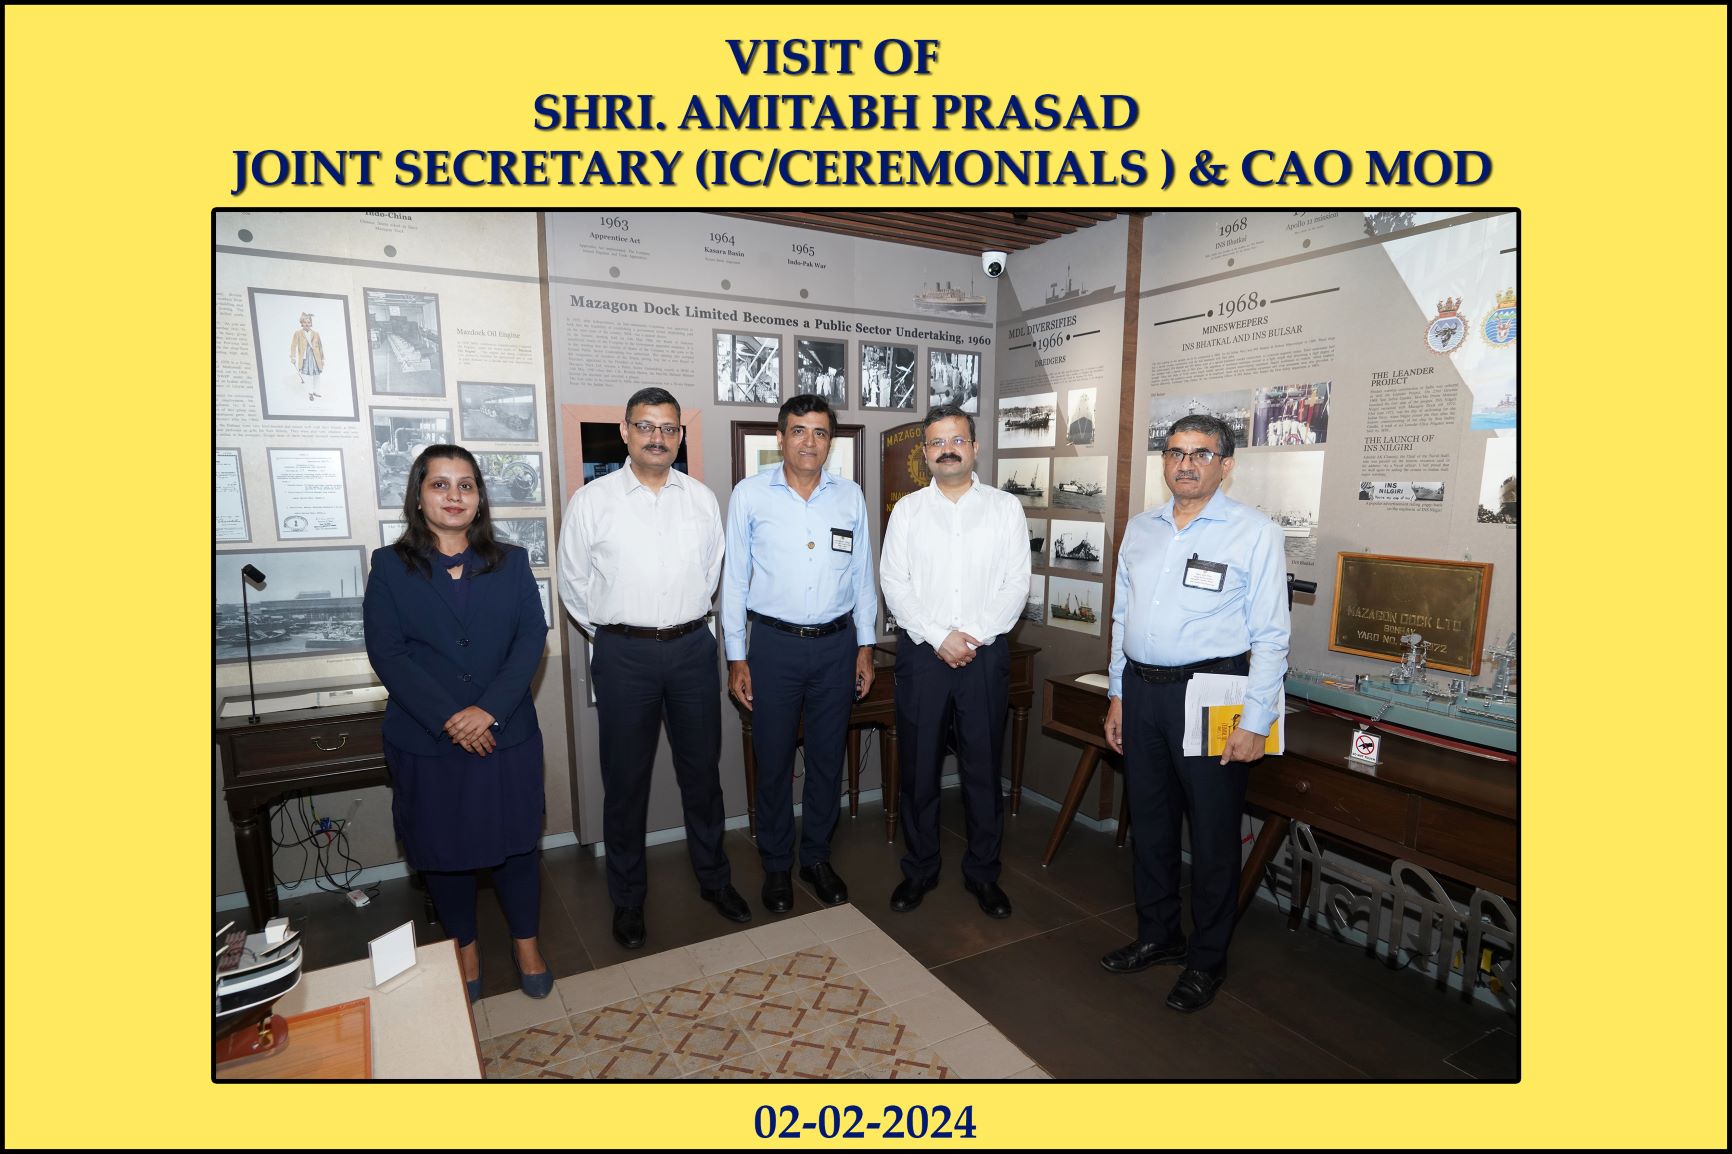 VISIT OF SHRI. AMITABH PRASAD JOINT SECRETARY (IC/CEREMONIALS) & CAO MoD - 02.02.2024